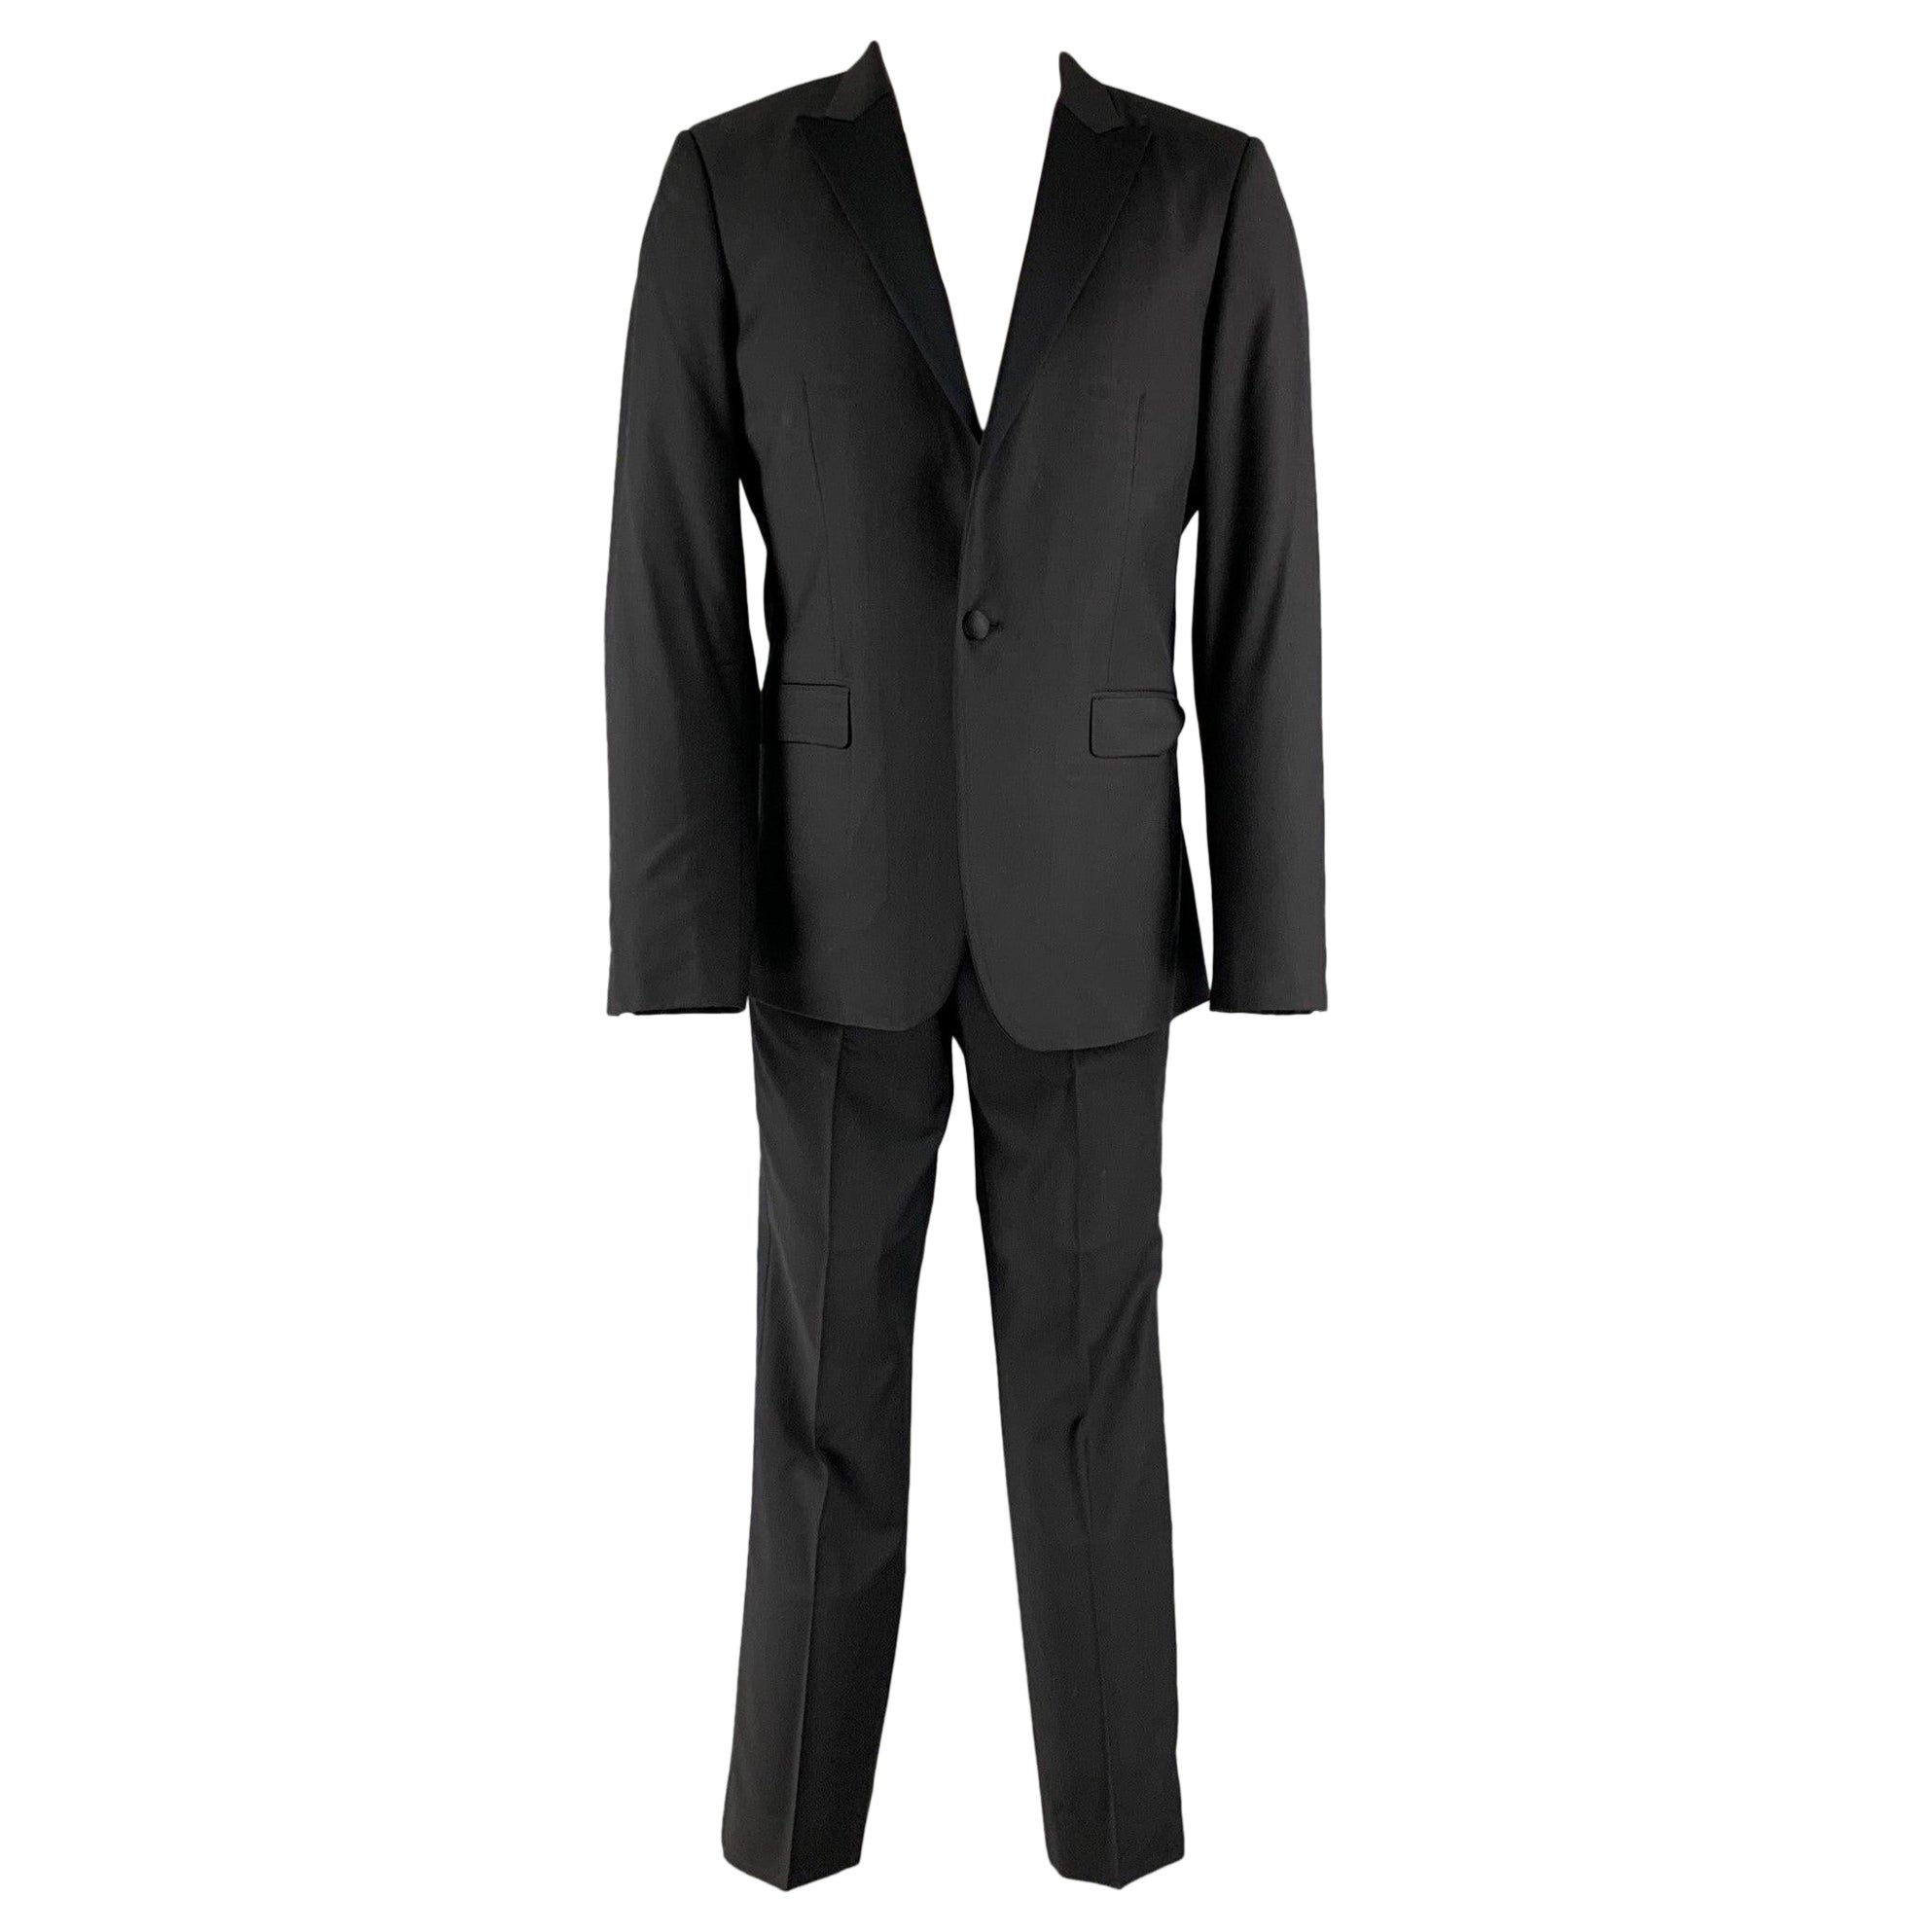 CALVIN KLEIN COLLECTION Size 38 Black Solid Wool Peak Lapel Tuxedo